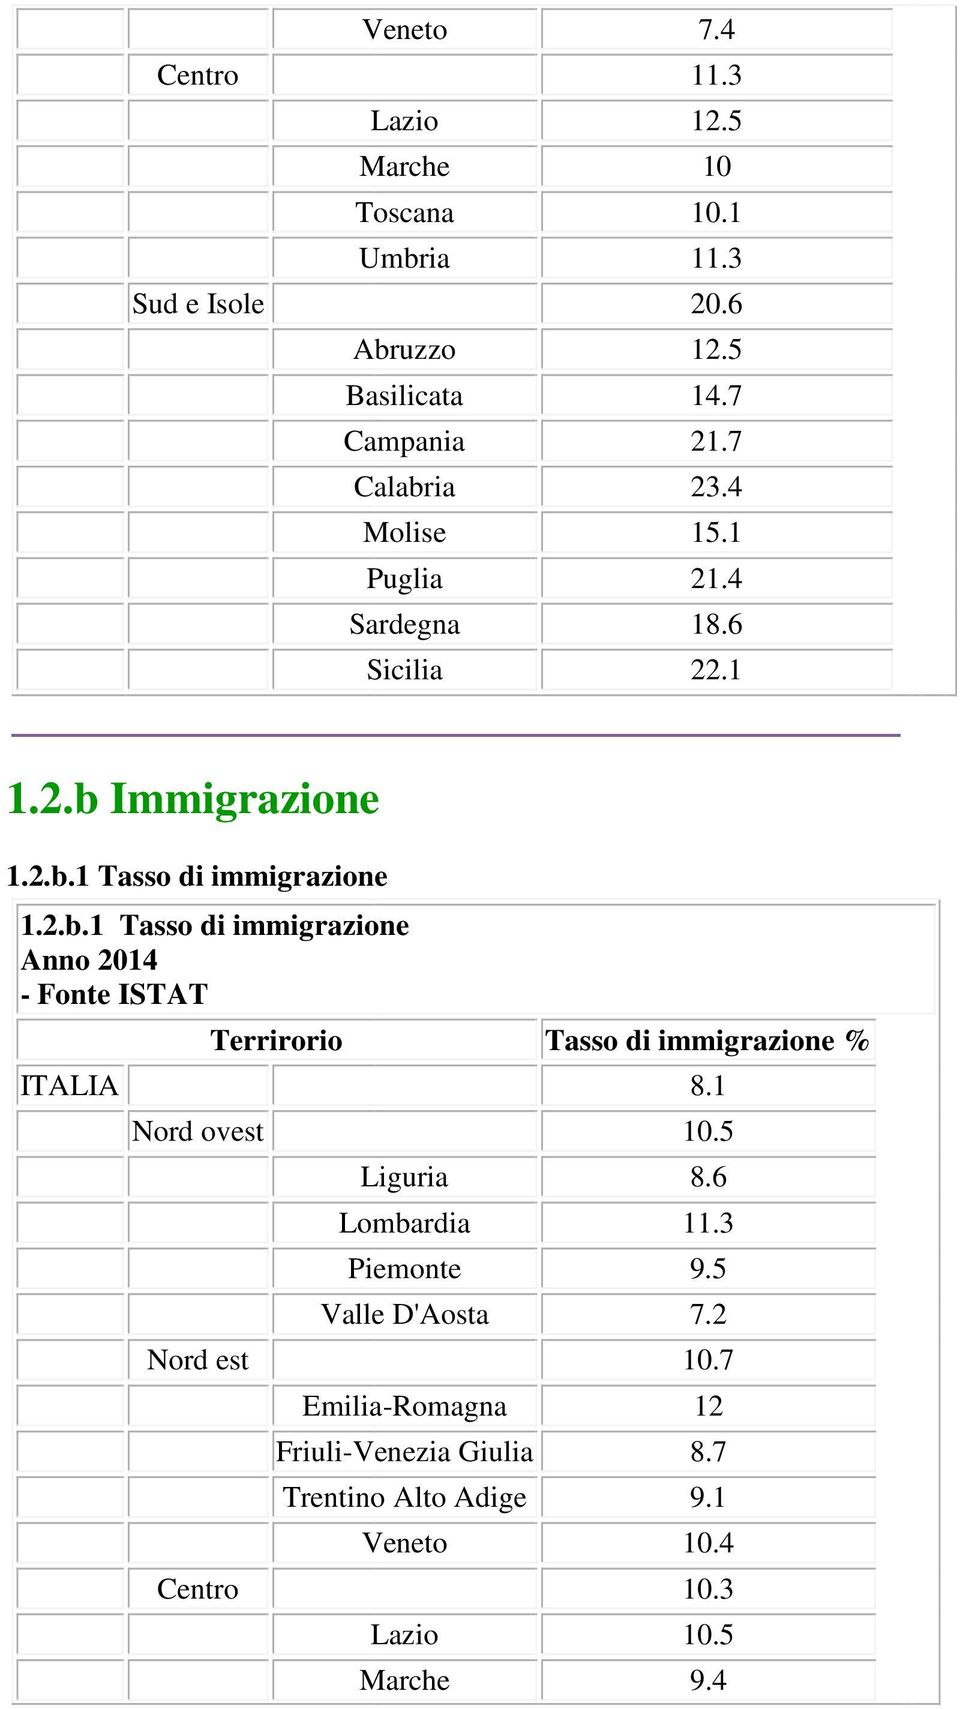 1 10.5 Liguria 8.6 Lombardia 11.3 Piemonte 9.5 Valle D'Aosta 7.2 10.7 Emilia-Romagna 12 Friuli-Venezia Giulia 8.7 Trentino Alto Adige 9.